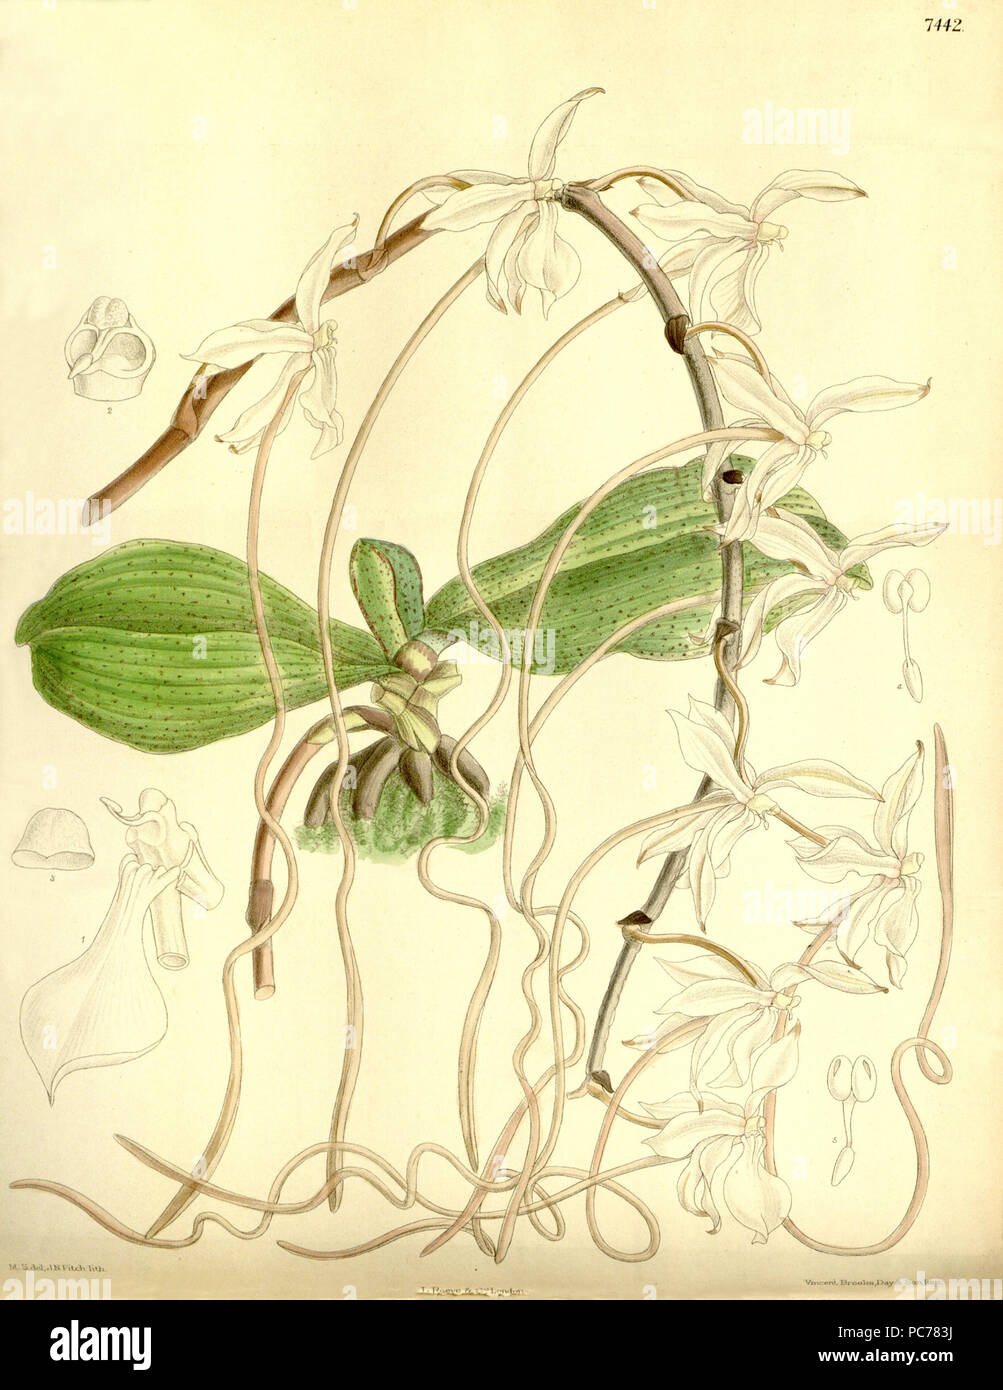 28 Aerangis kotschyana (as Angraecum kotschyi) - Curtis' 121 (Ser. 3 no. 51) pl. 7442 (1895) Stock Photo